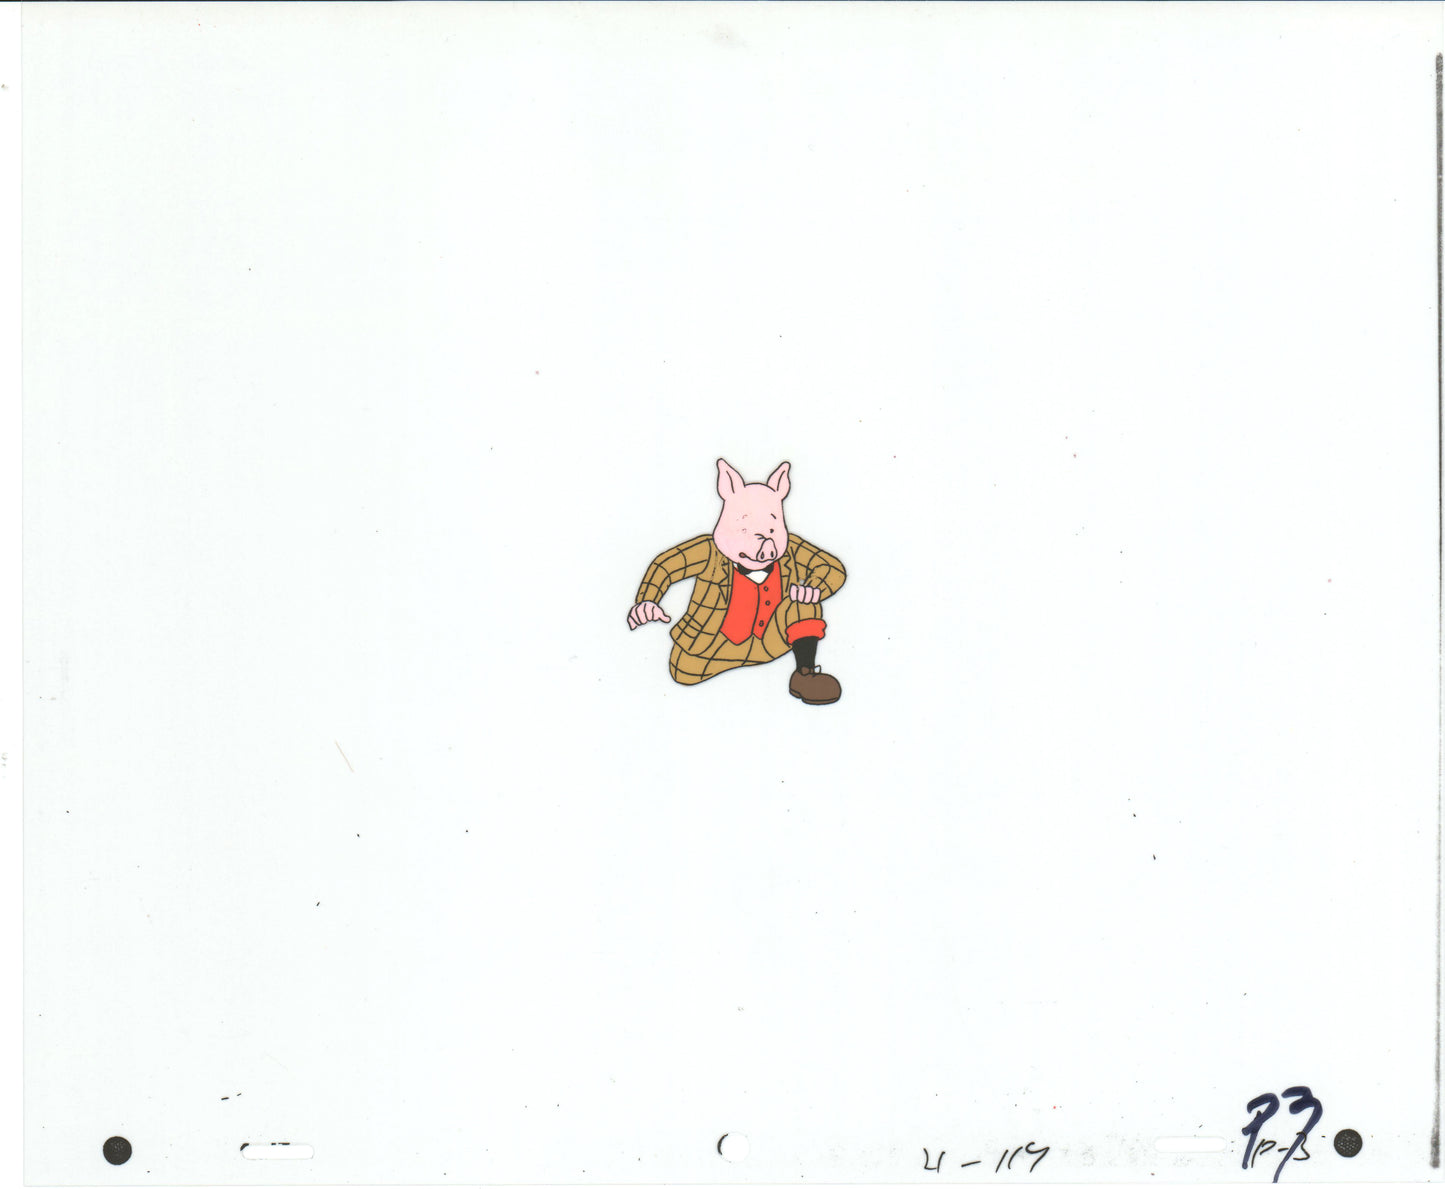 RUPERT Bear Podgy Pig Original Production Animation Cel from the Cartoon by Nelvana Tourtel Animation 1990s 8-338